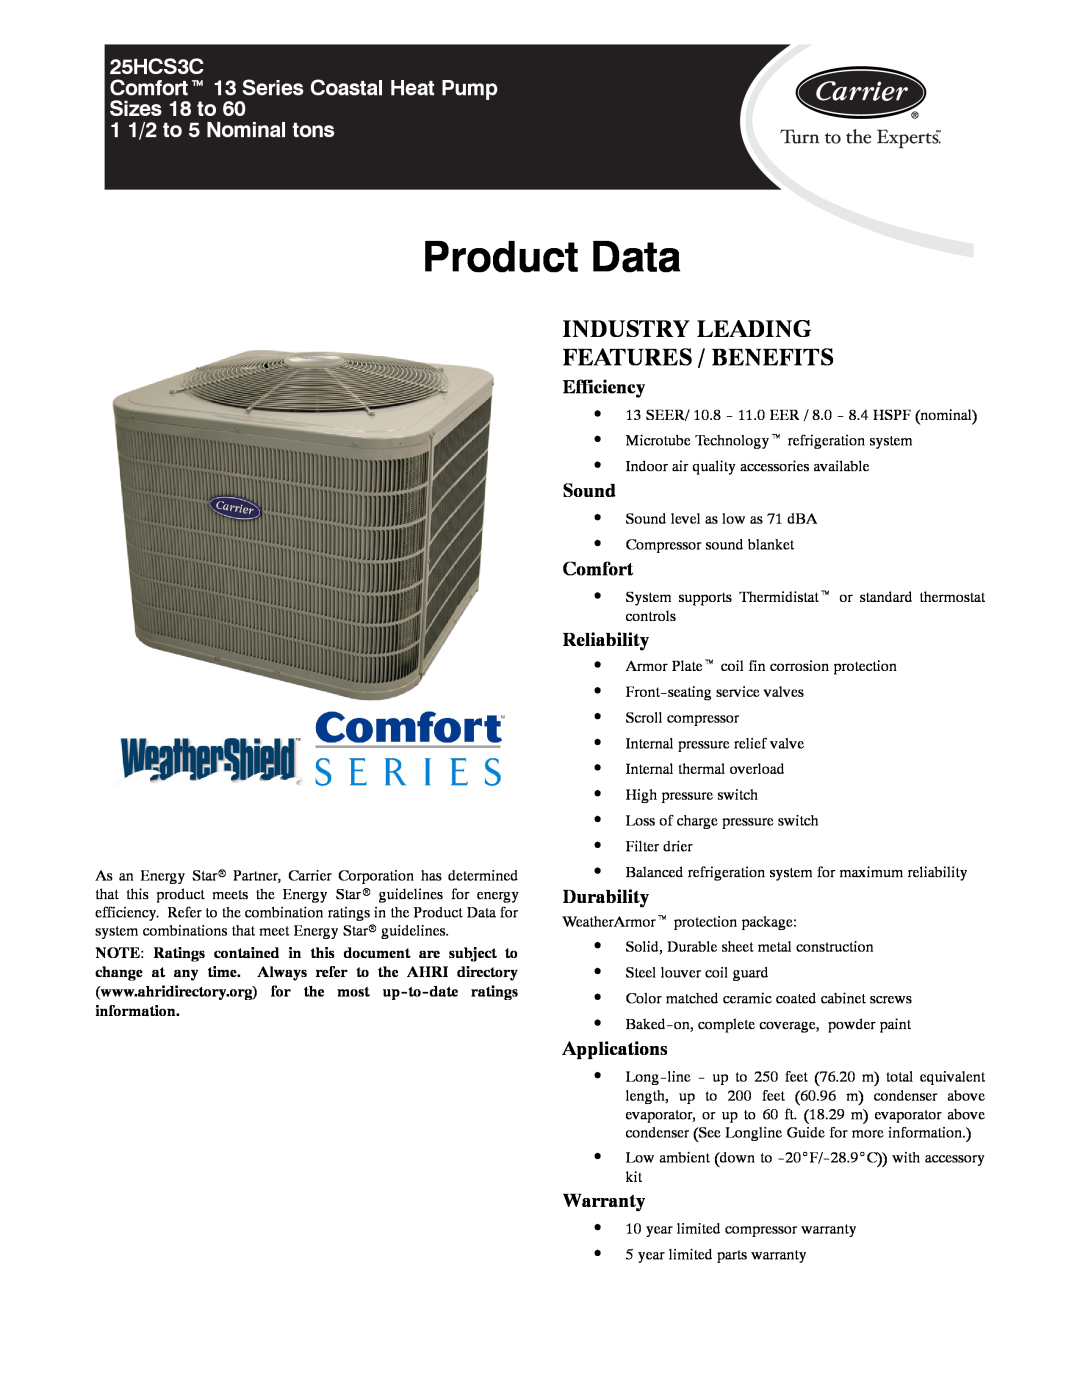 Carrier warranty Industry Leading Features / Benefits, Product Data, 25HCS3C Comfortt 13 Series Coastal Heat Pump 